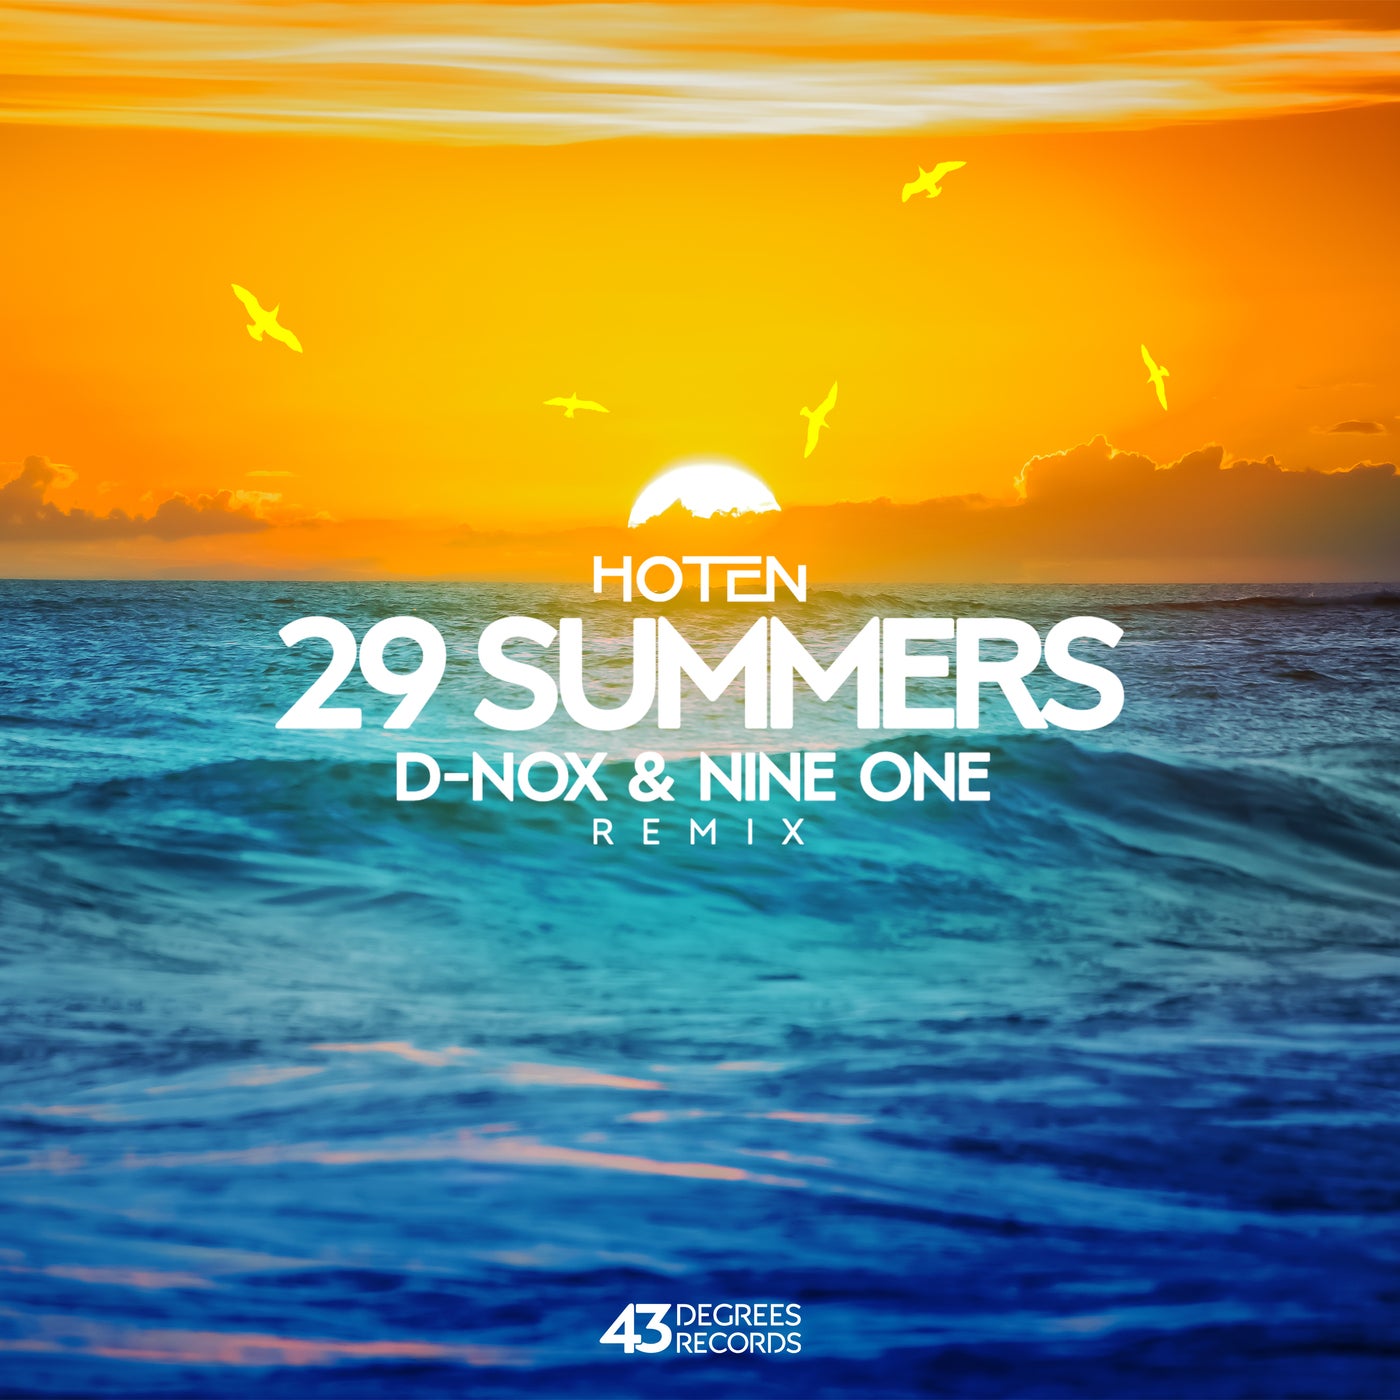 Hoten - 29 Summers (d-nox, Nine One Remix) on Revolution Radio